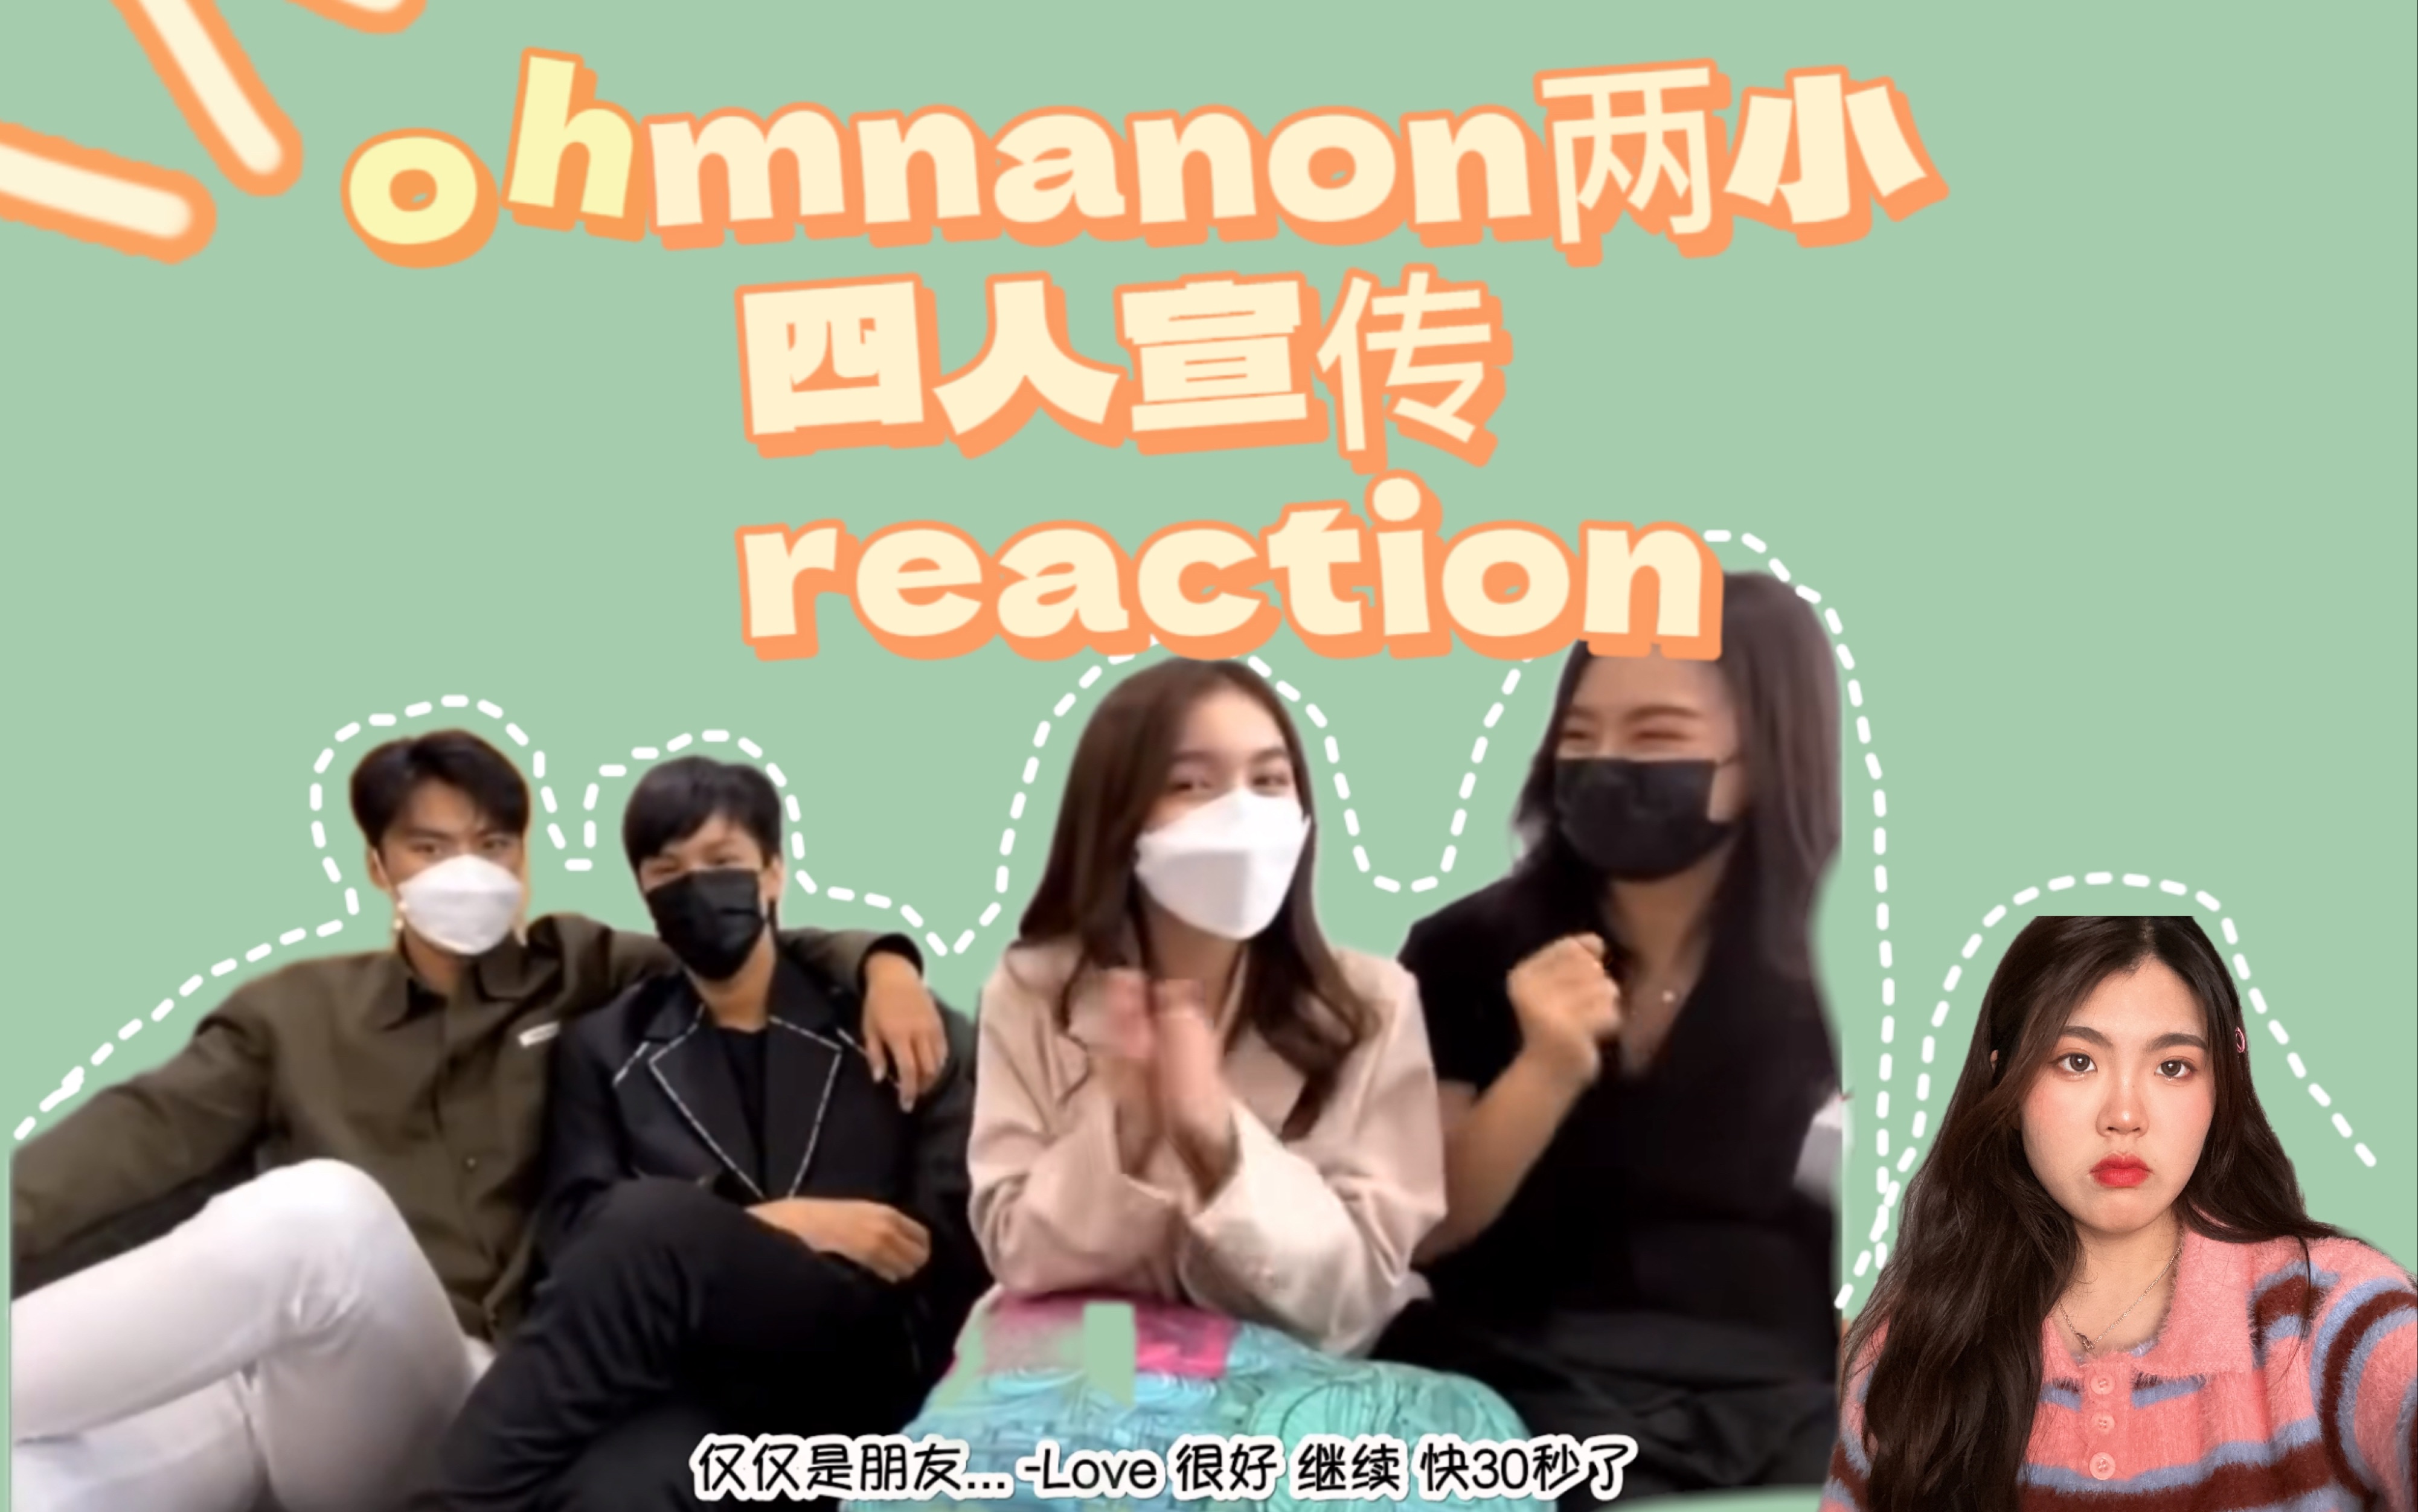 【ohmnanon reaction】让我们一起看小情侣结界和饼子冷脸哈哈哈！